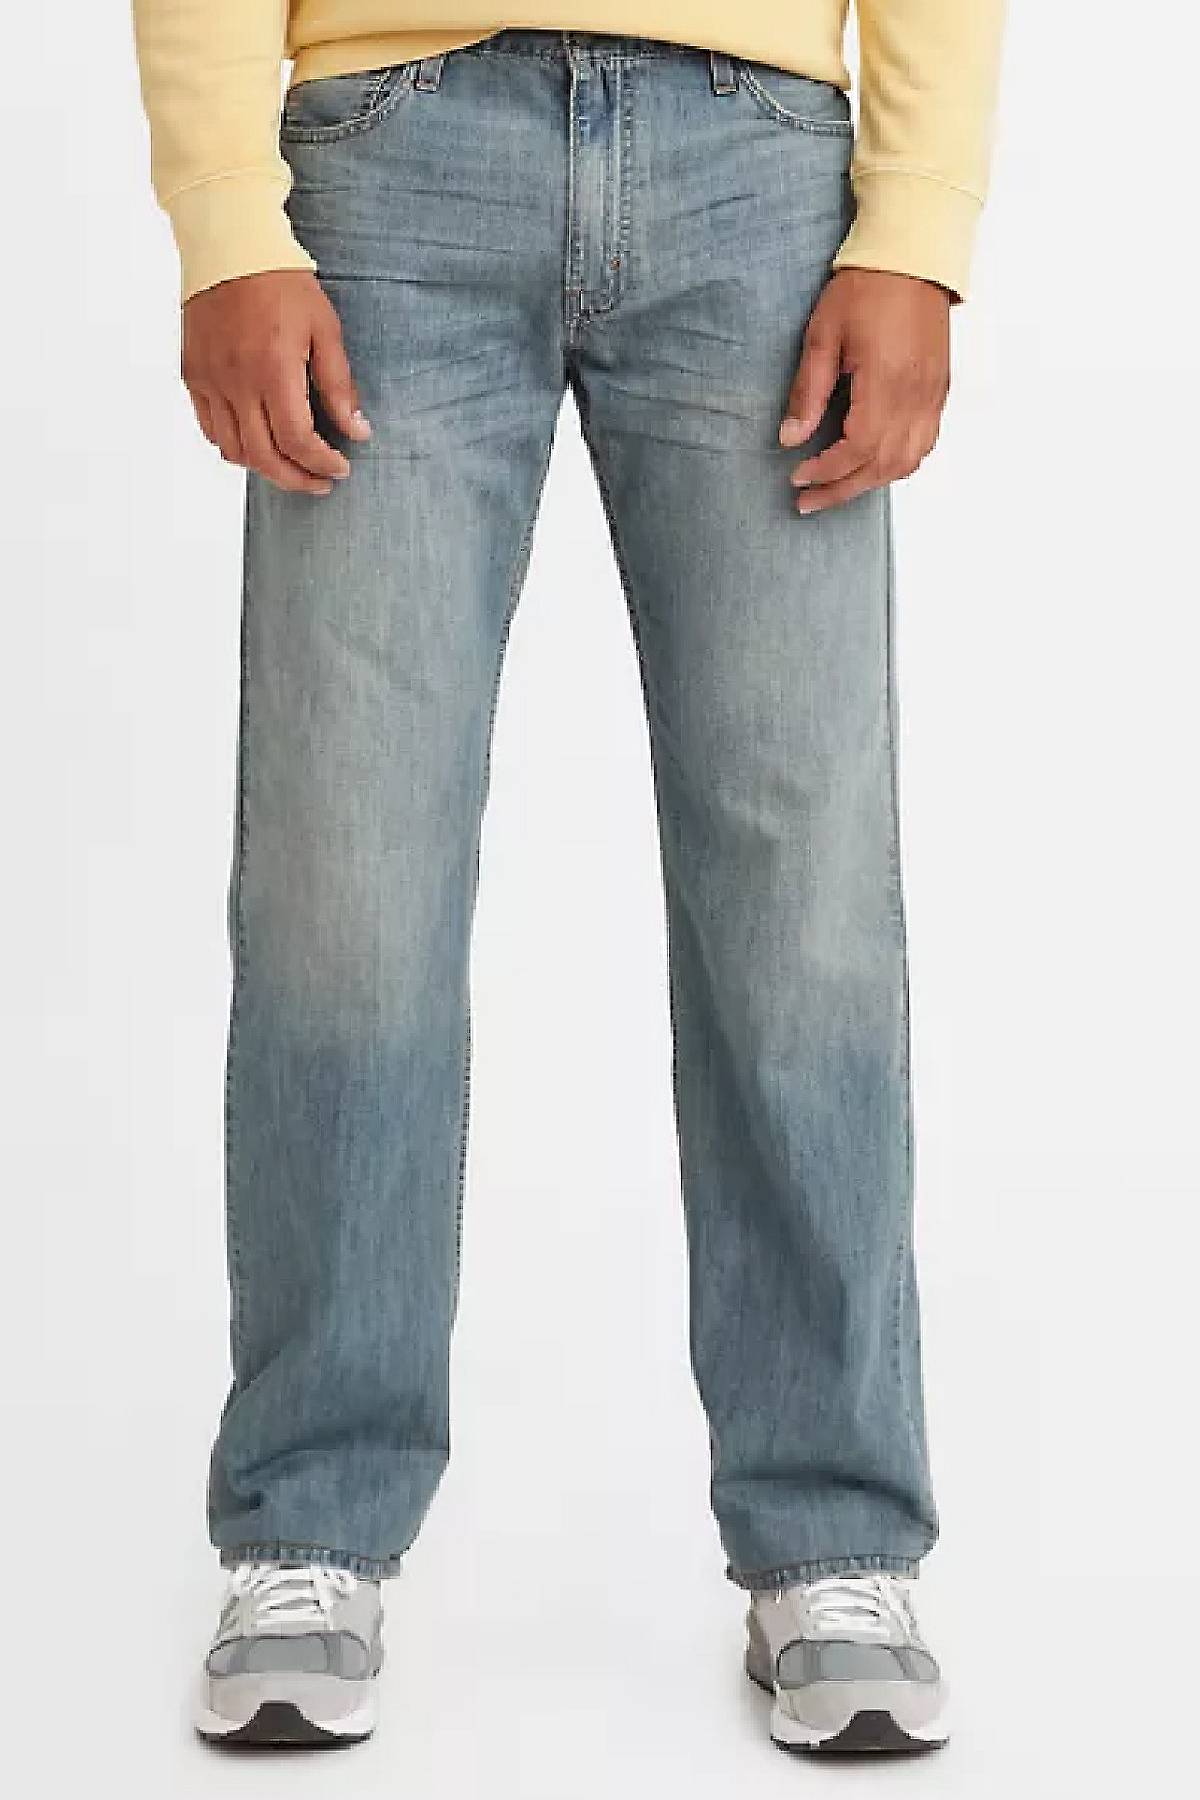 Model wearing 569™ Loose Straight jeans